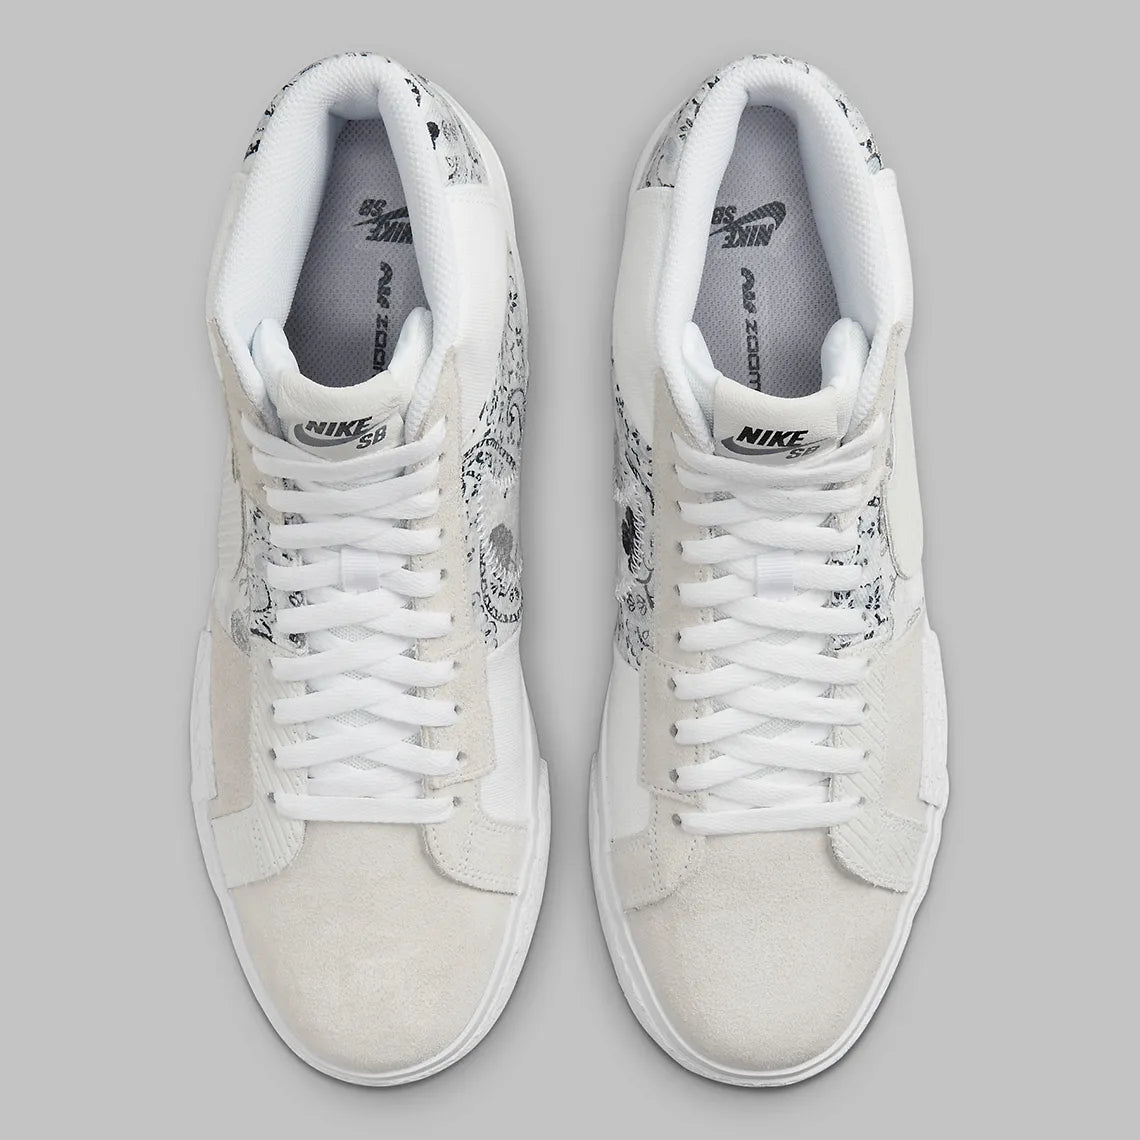 Nike SB Zoom Blazer Mid Premium Floral White Grey